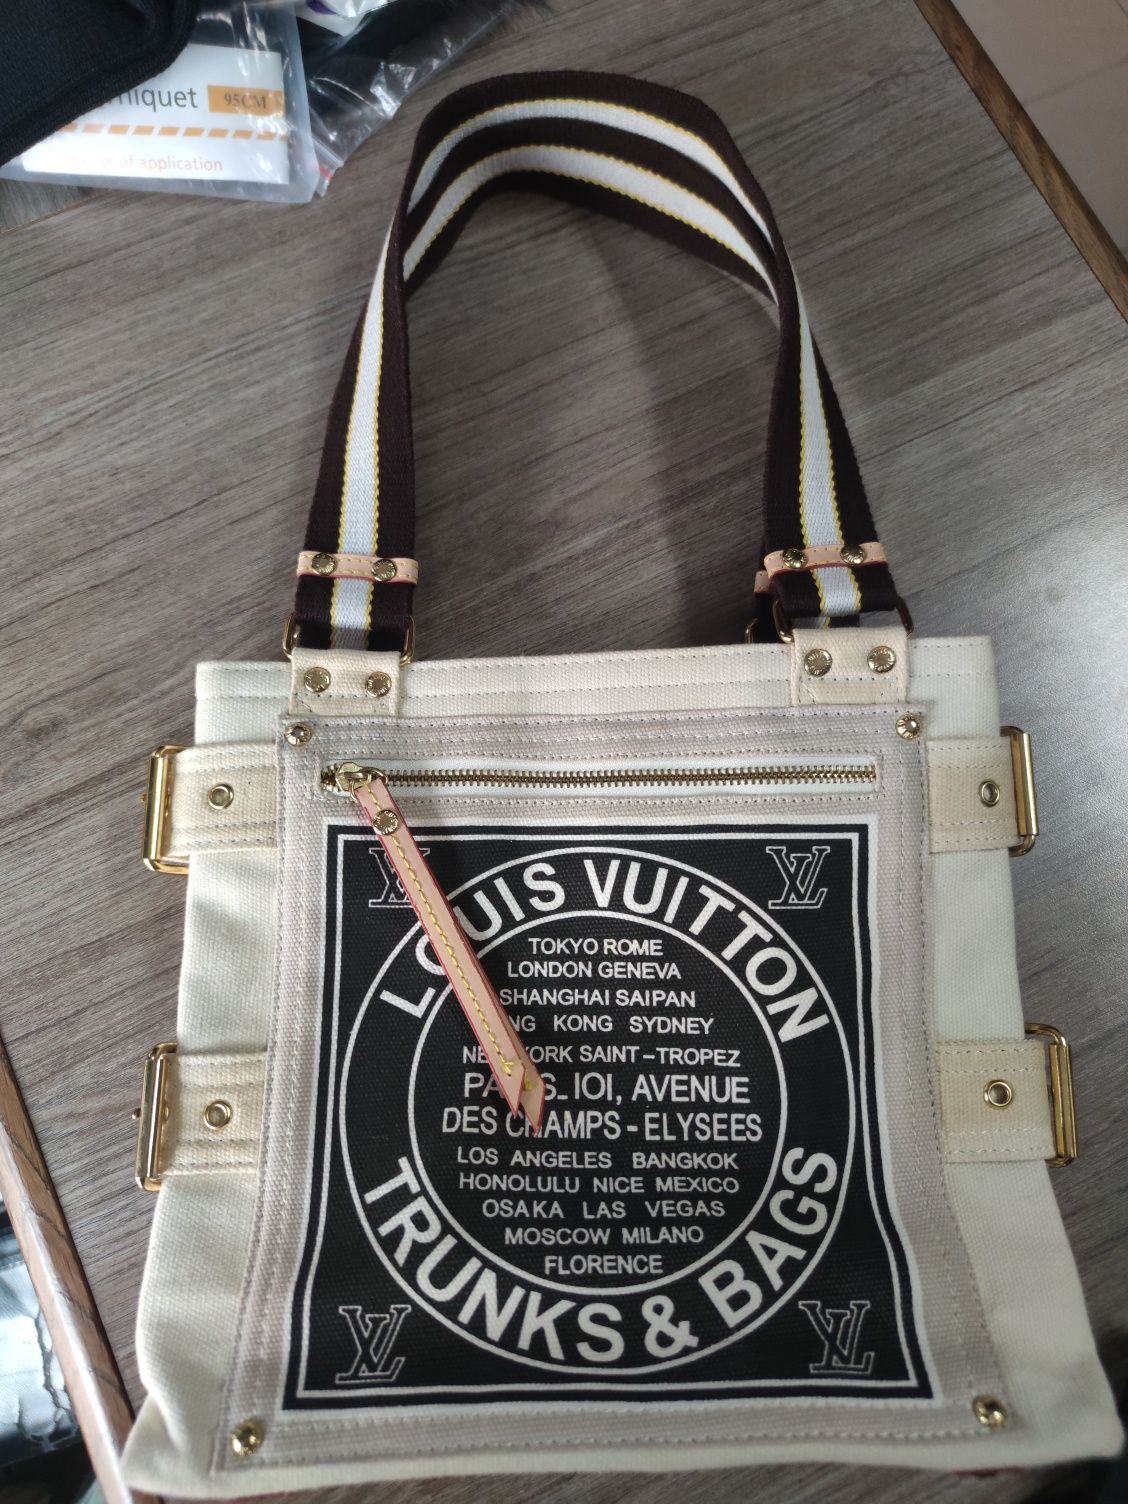 Torebka damska Louis Vuitton Trunks & Bags